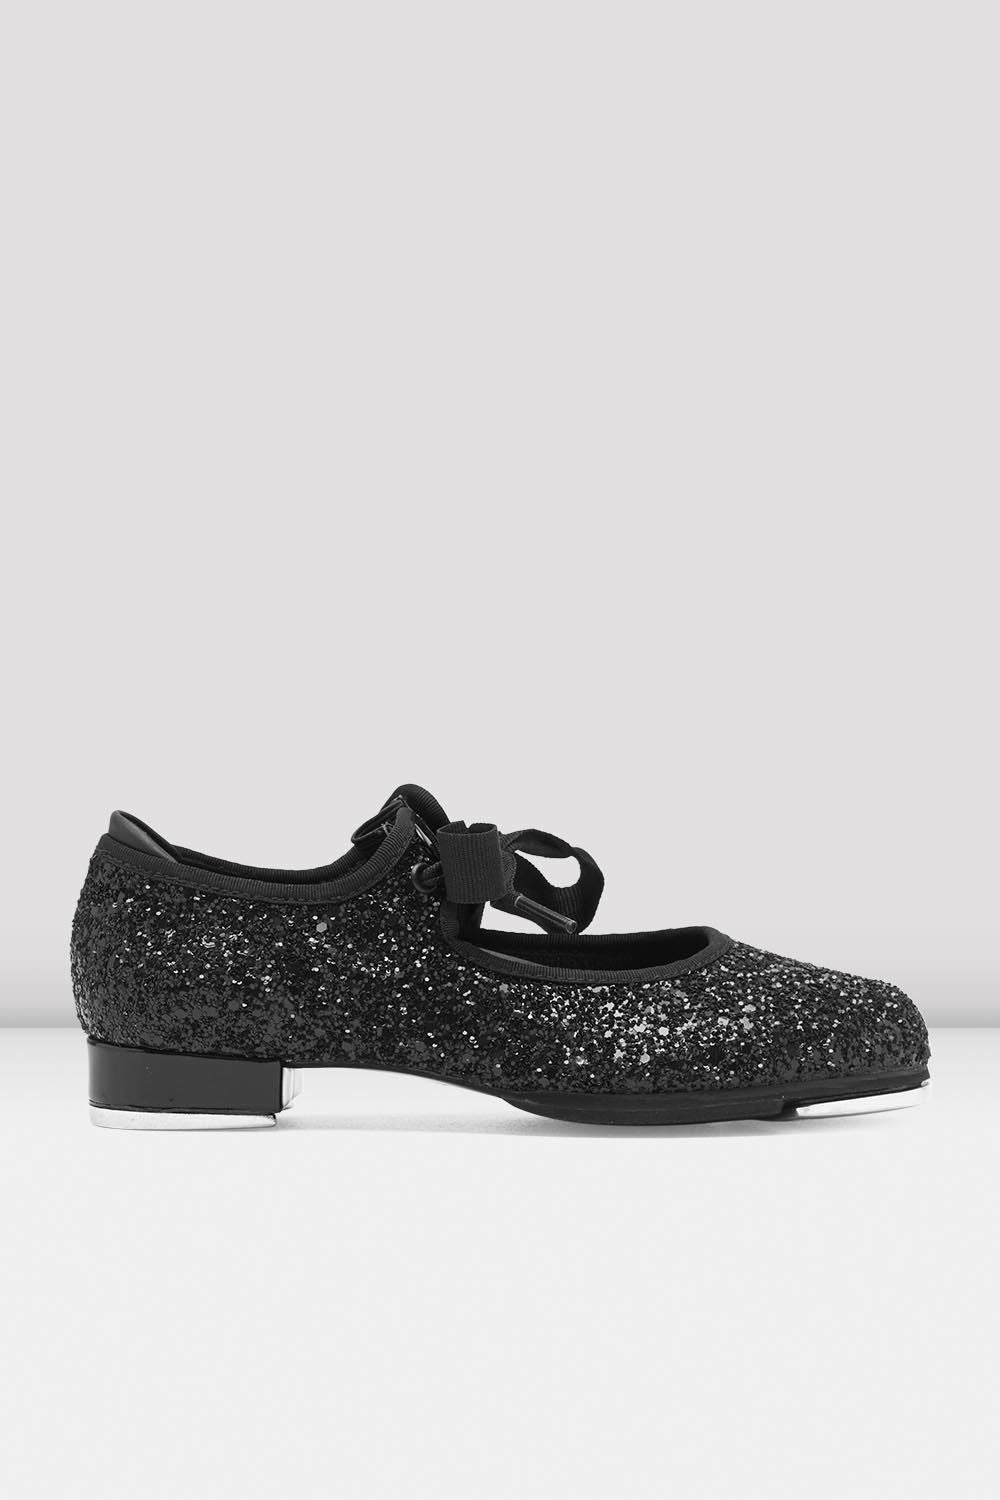 BLOCH Childrens Glitter Tap Shoes, Black Glitter